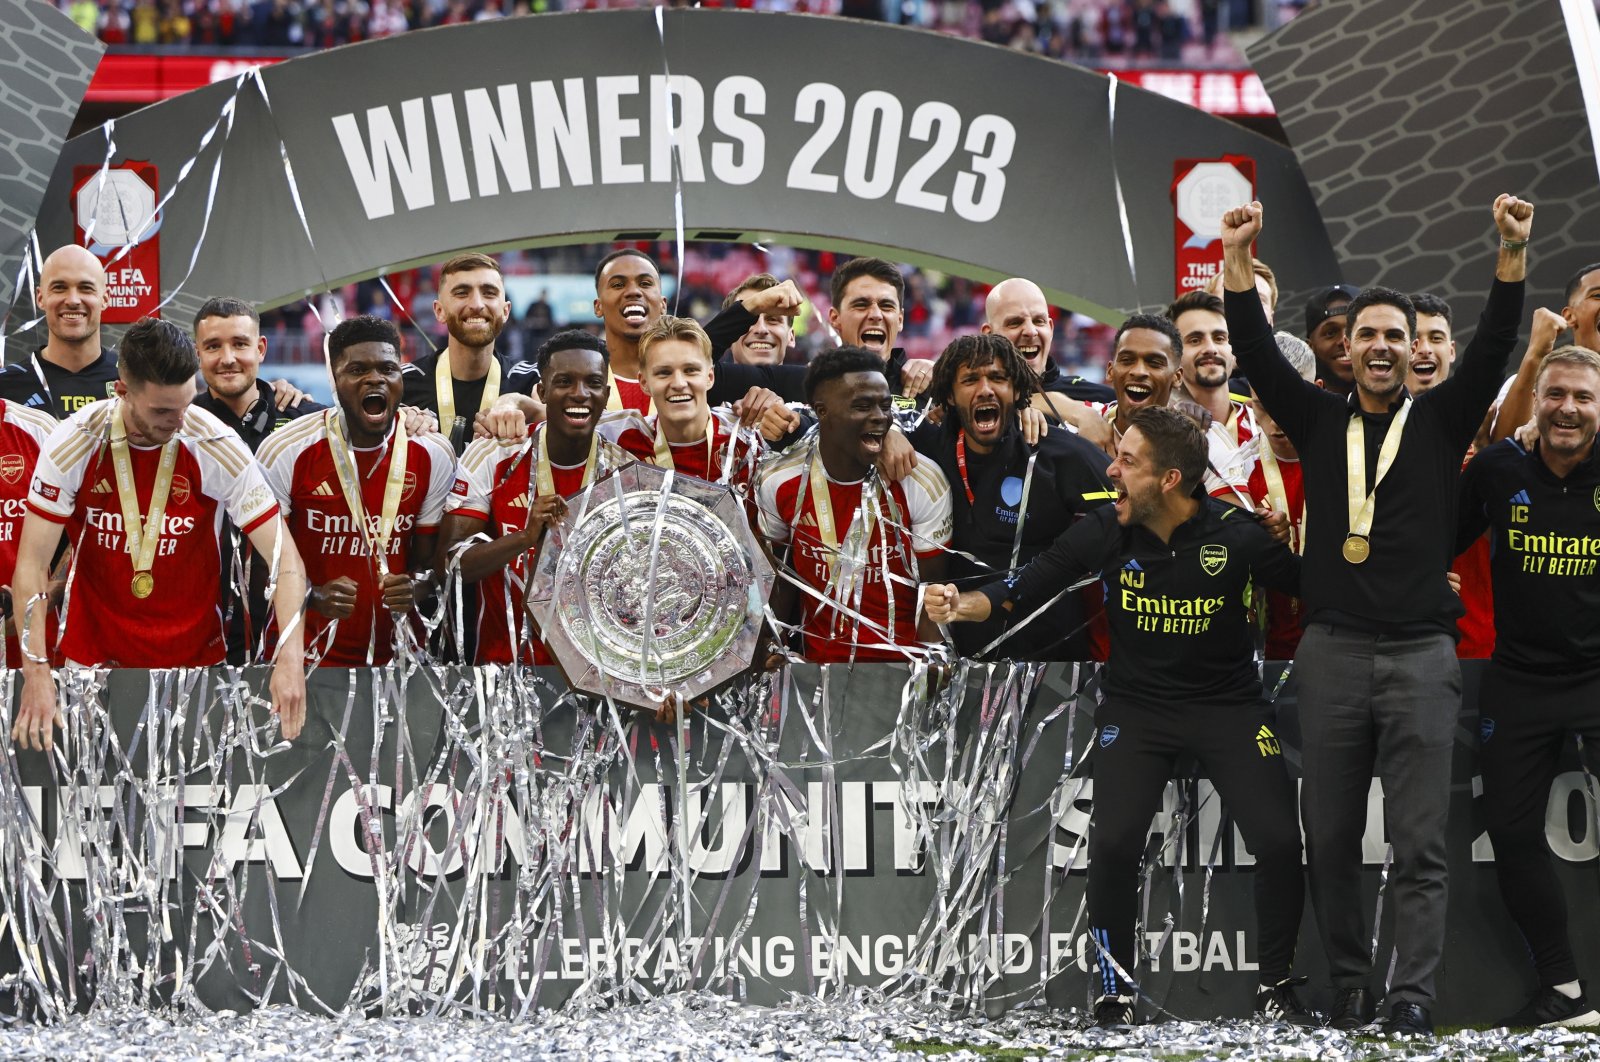 Arsenal’s Community Shield win ends Man City’s silverware reign